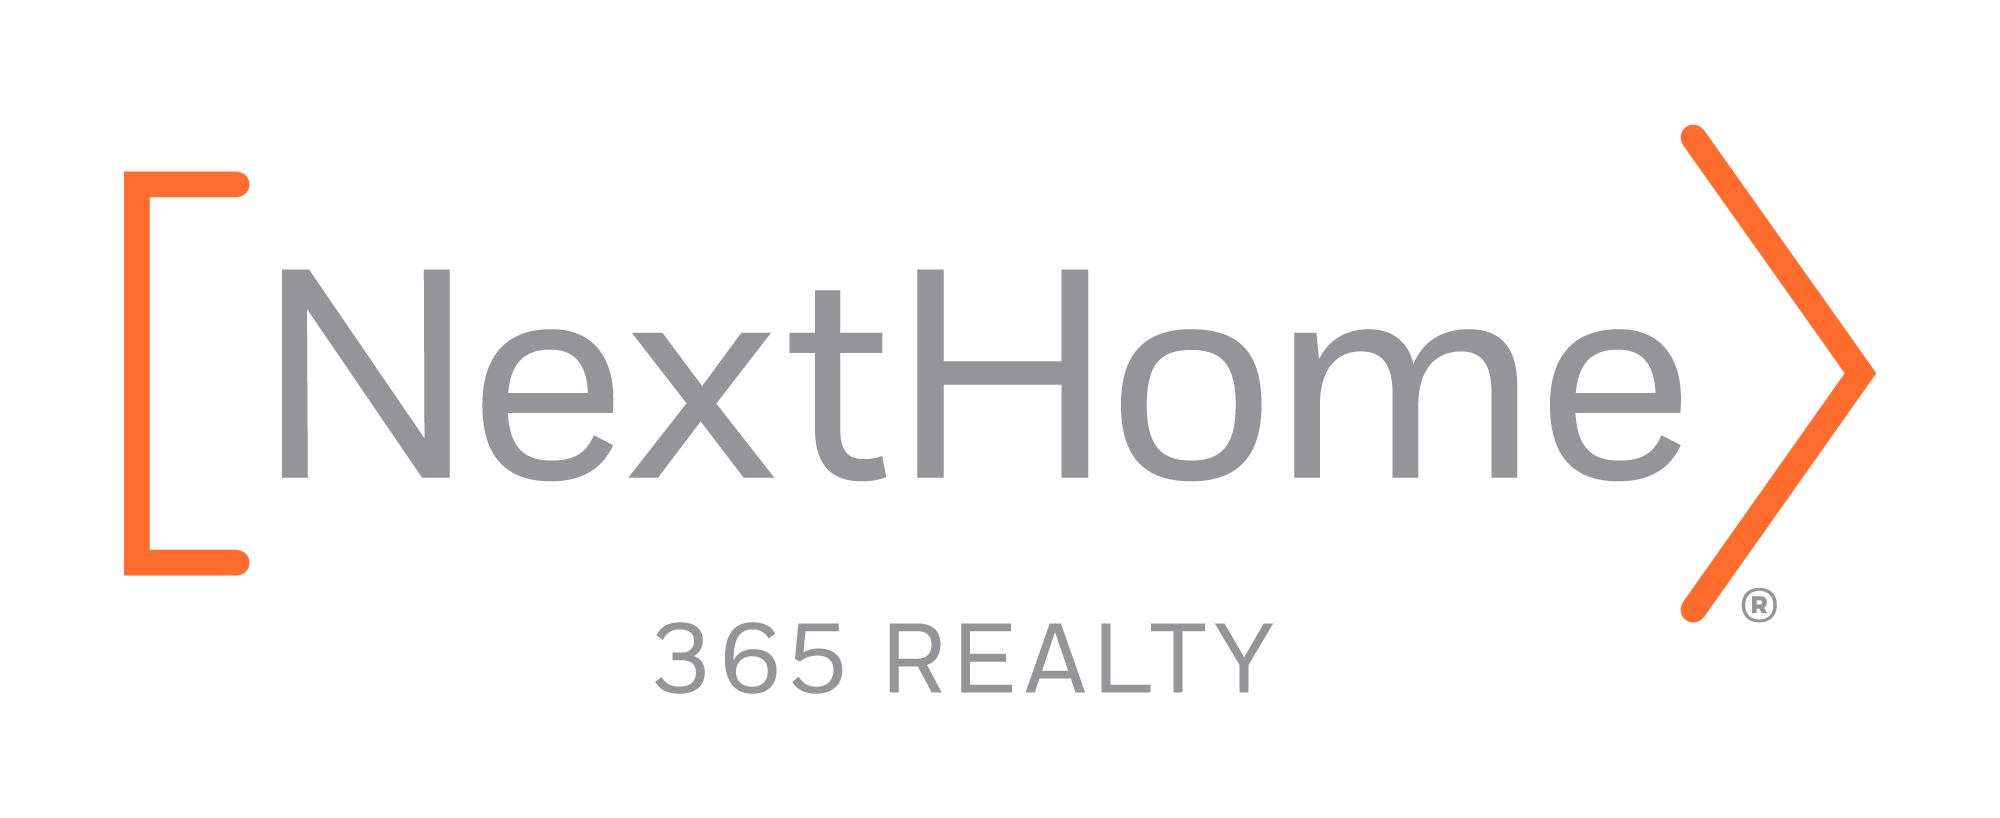 Nexthome 365 Realty